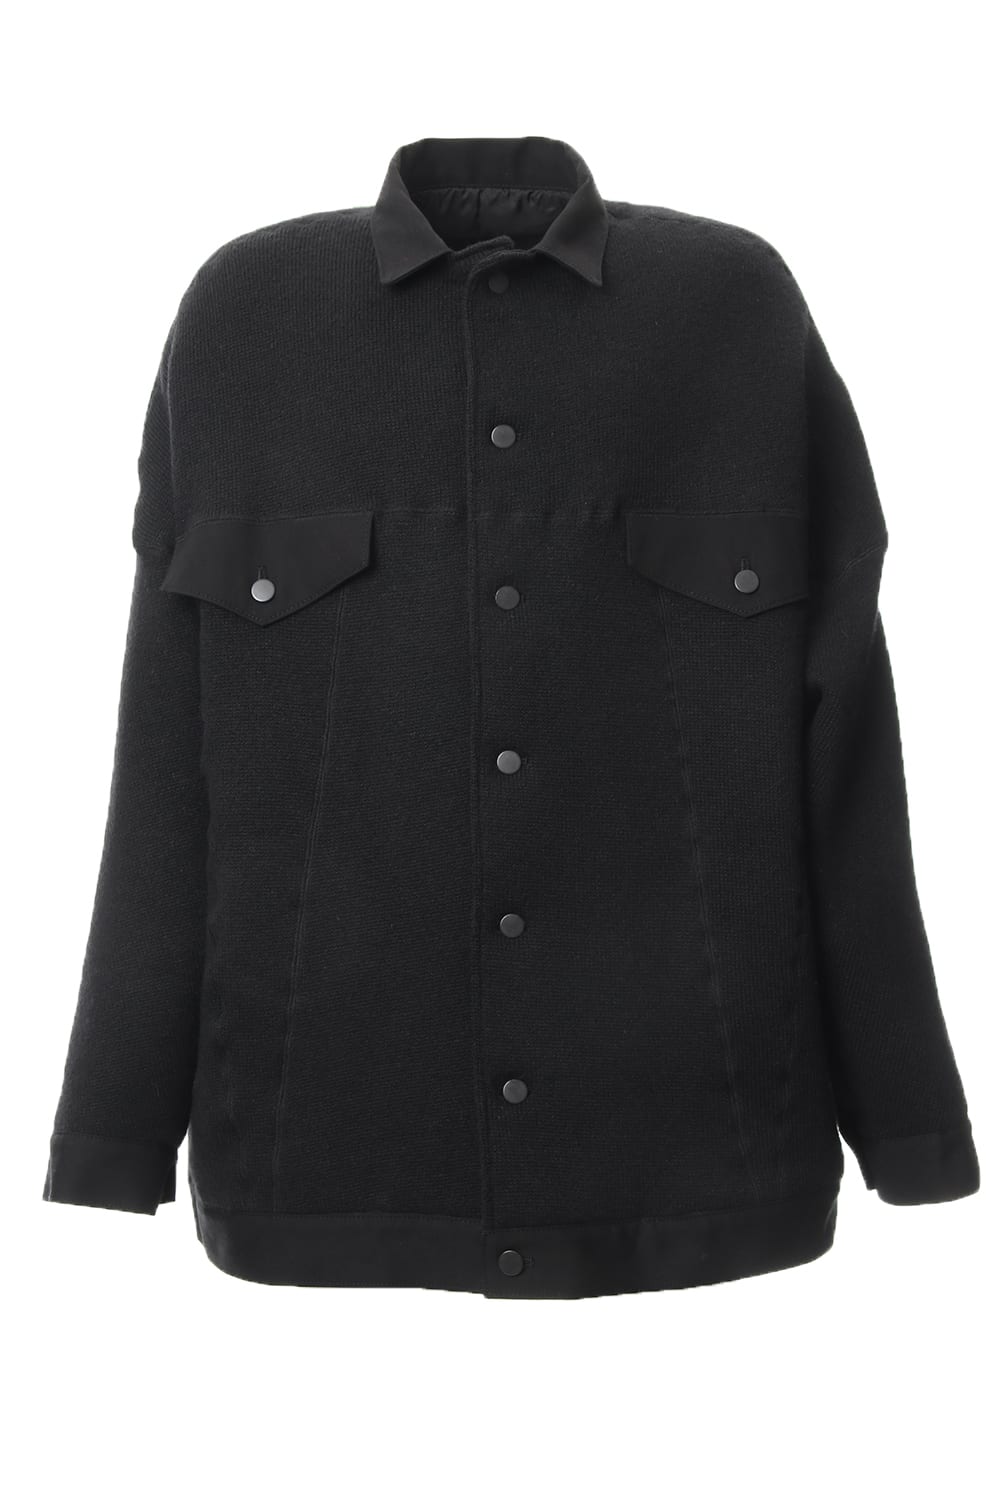 Black Denim Jacket Outfit Combinations Ideas for Men - TiptopGents